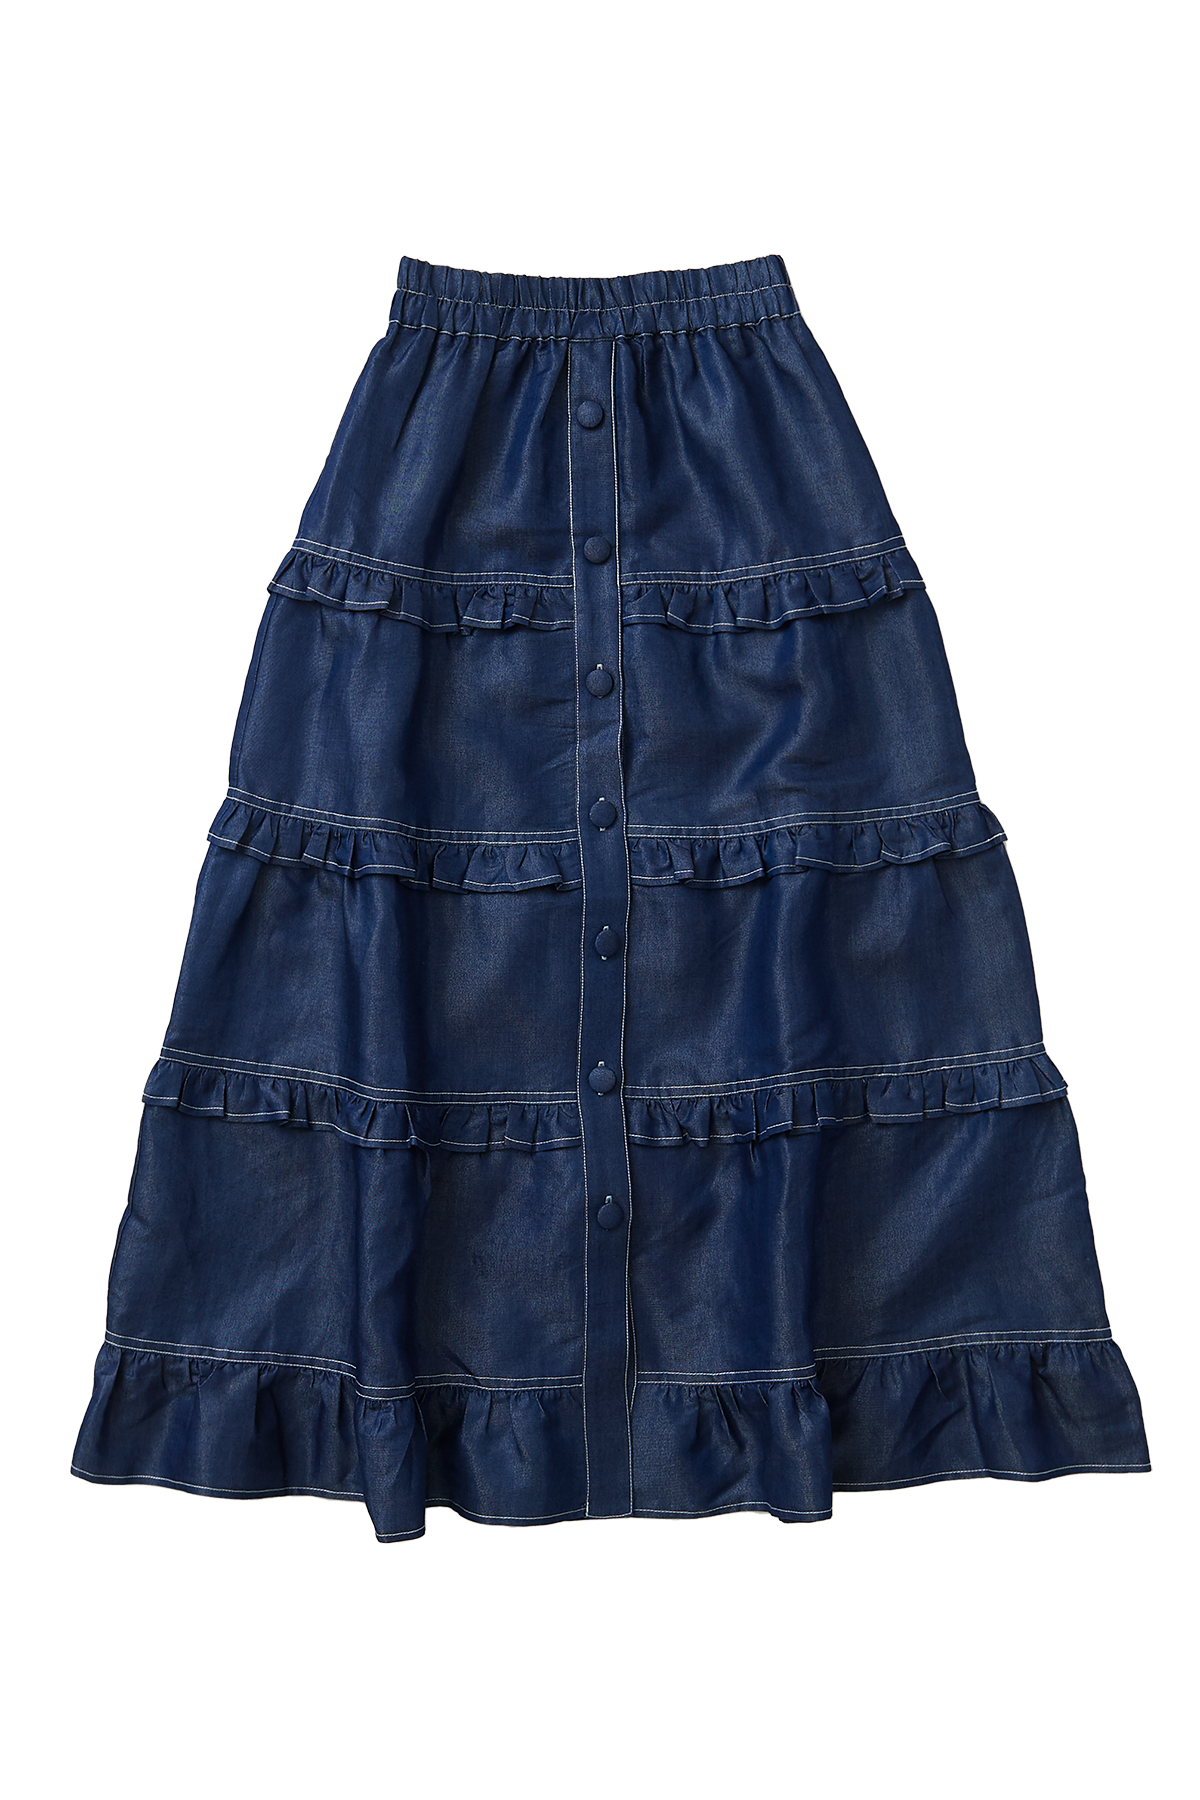 Glitter Chambray Frill Skirt / Navy